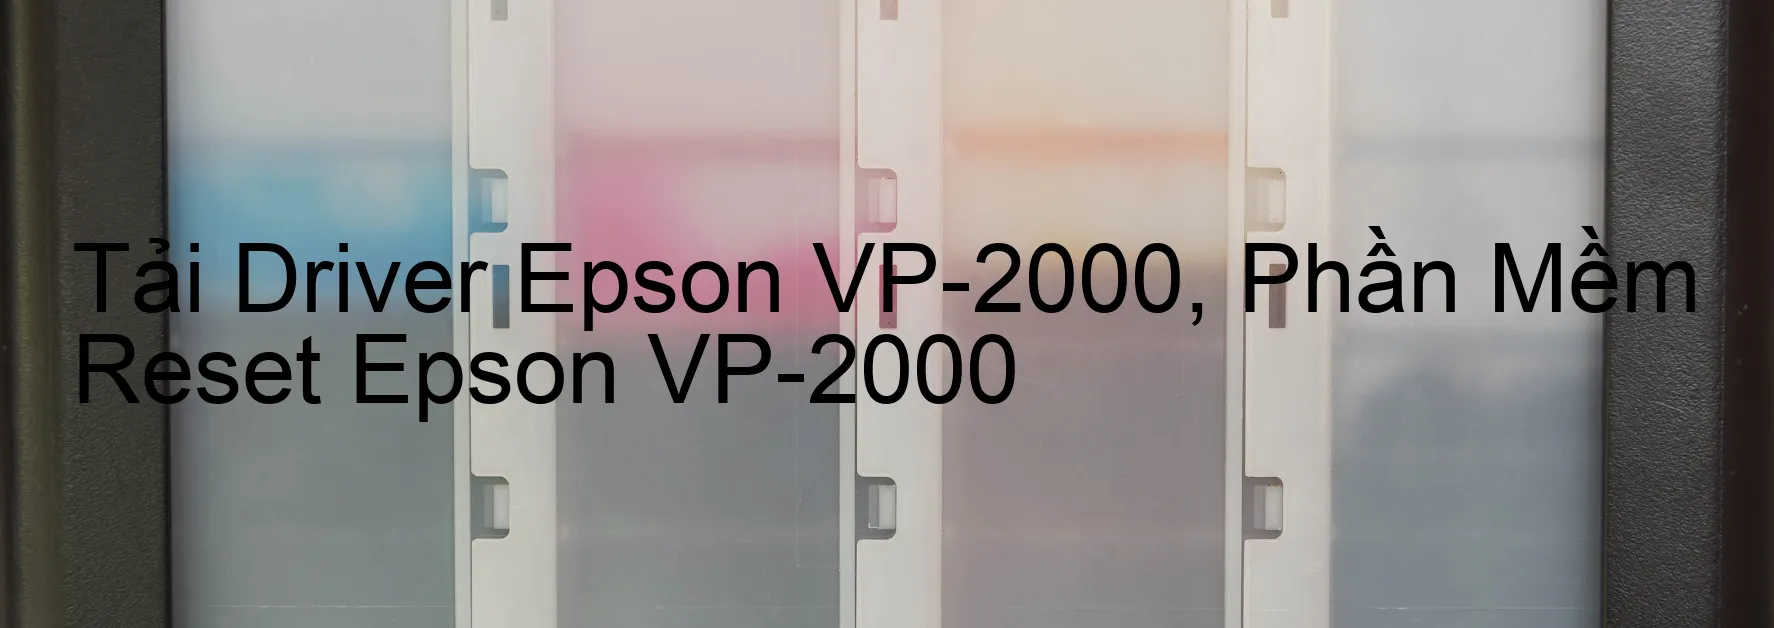 Driver Epson VP-2000, Phần Mềm Reset Epson VP-2000